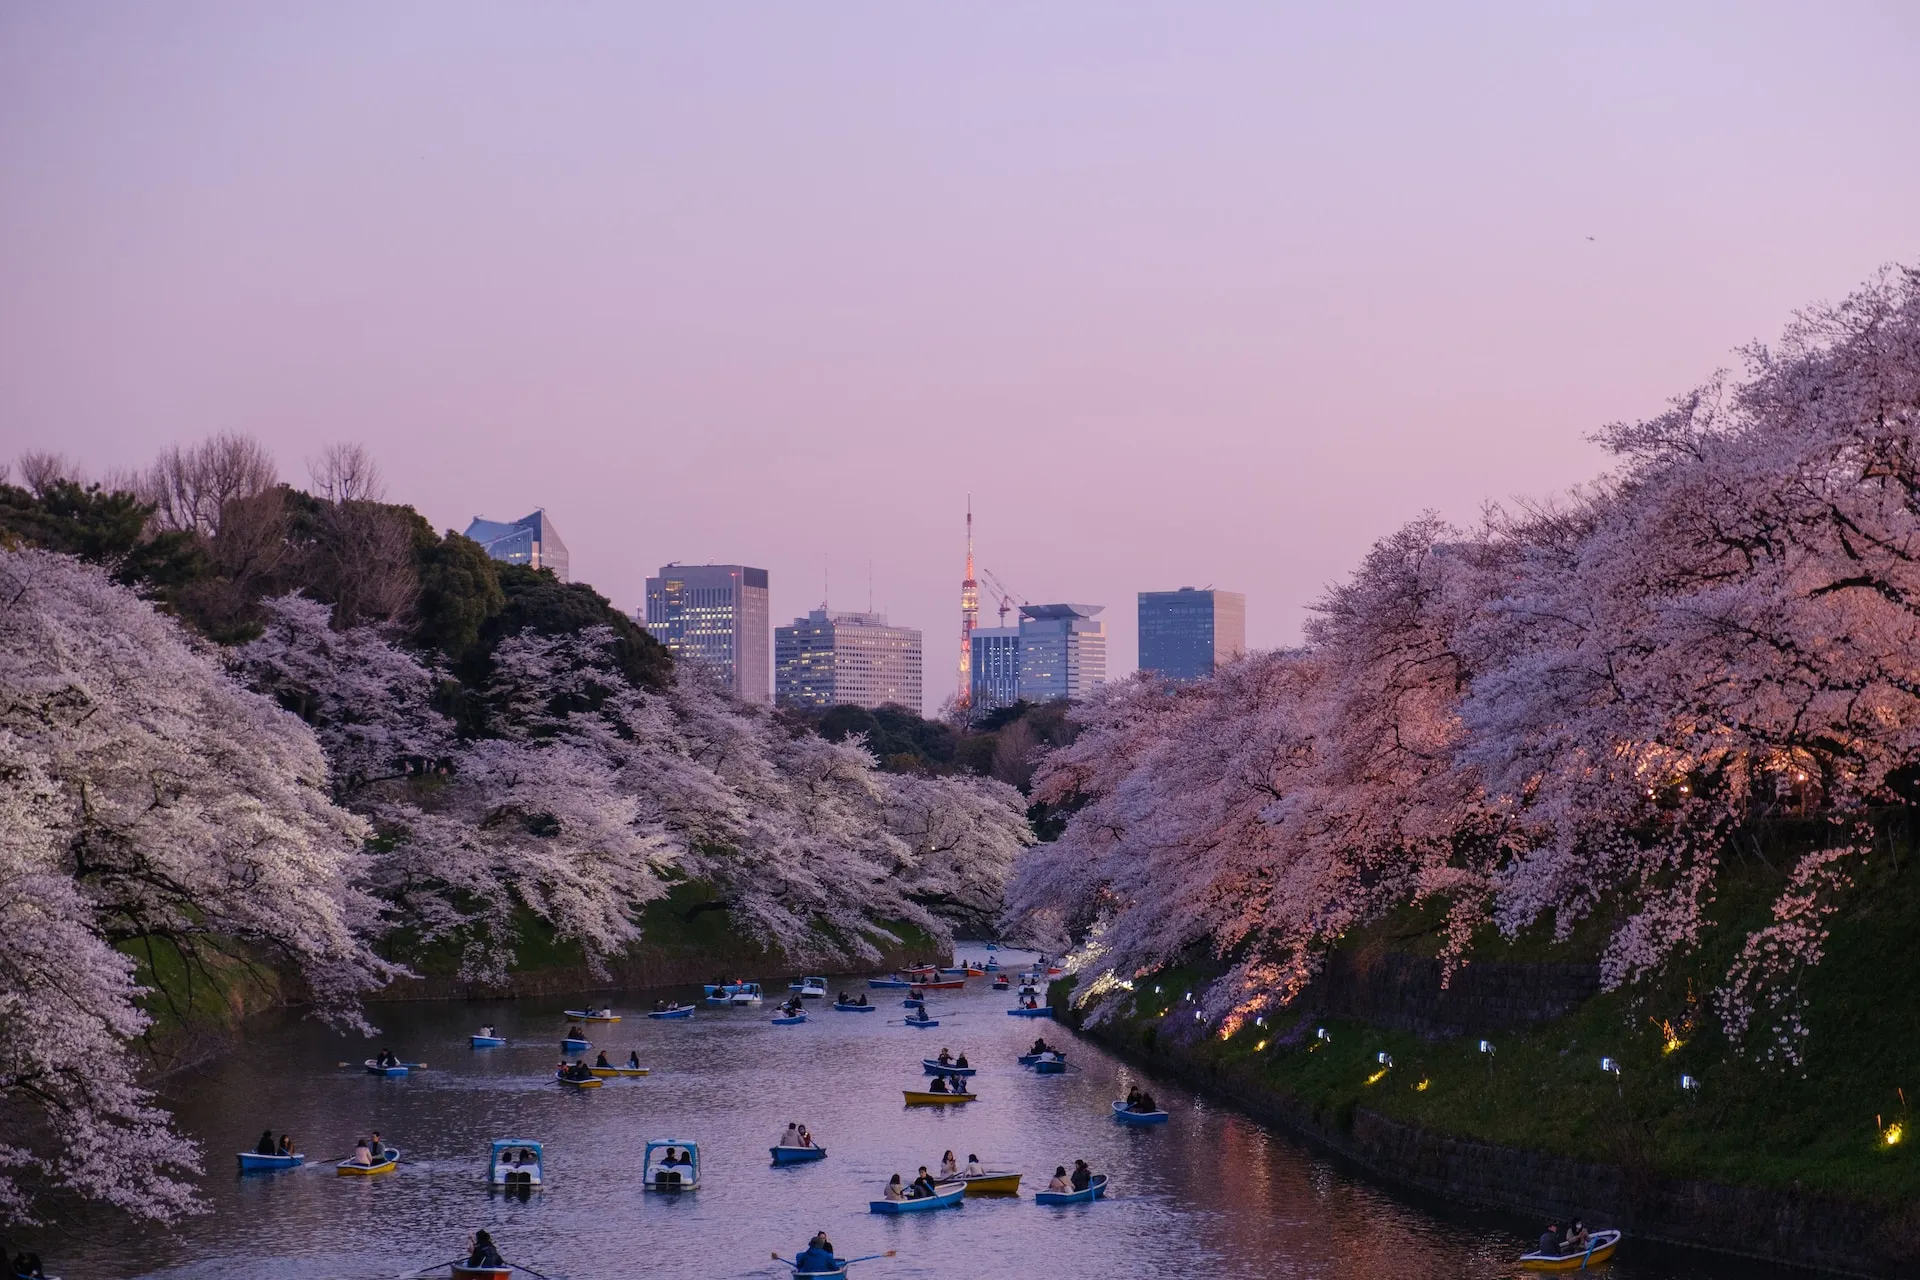 Sumida River in Tokyo. Source: Photo by Yu Kato on Unsplash